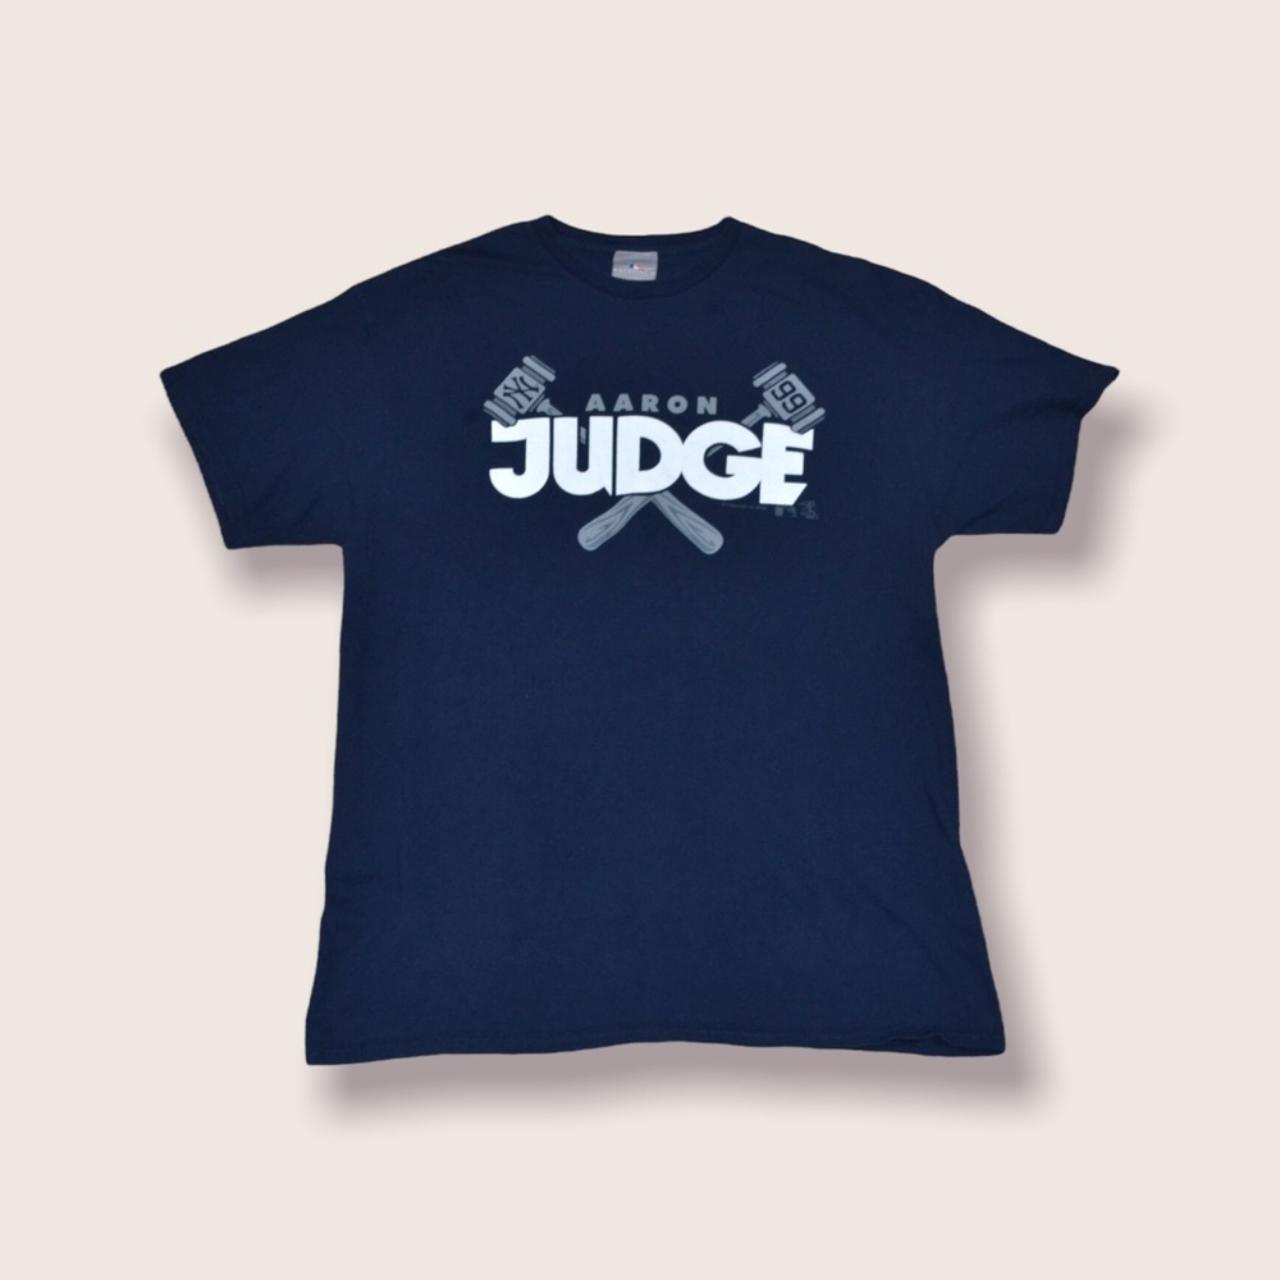 aaron judge mens shirt